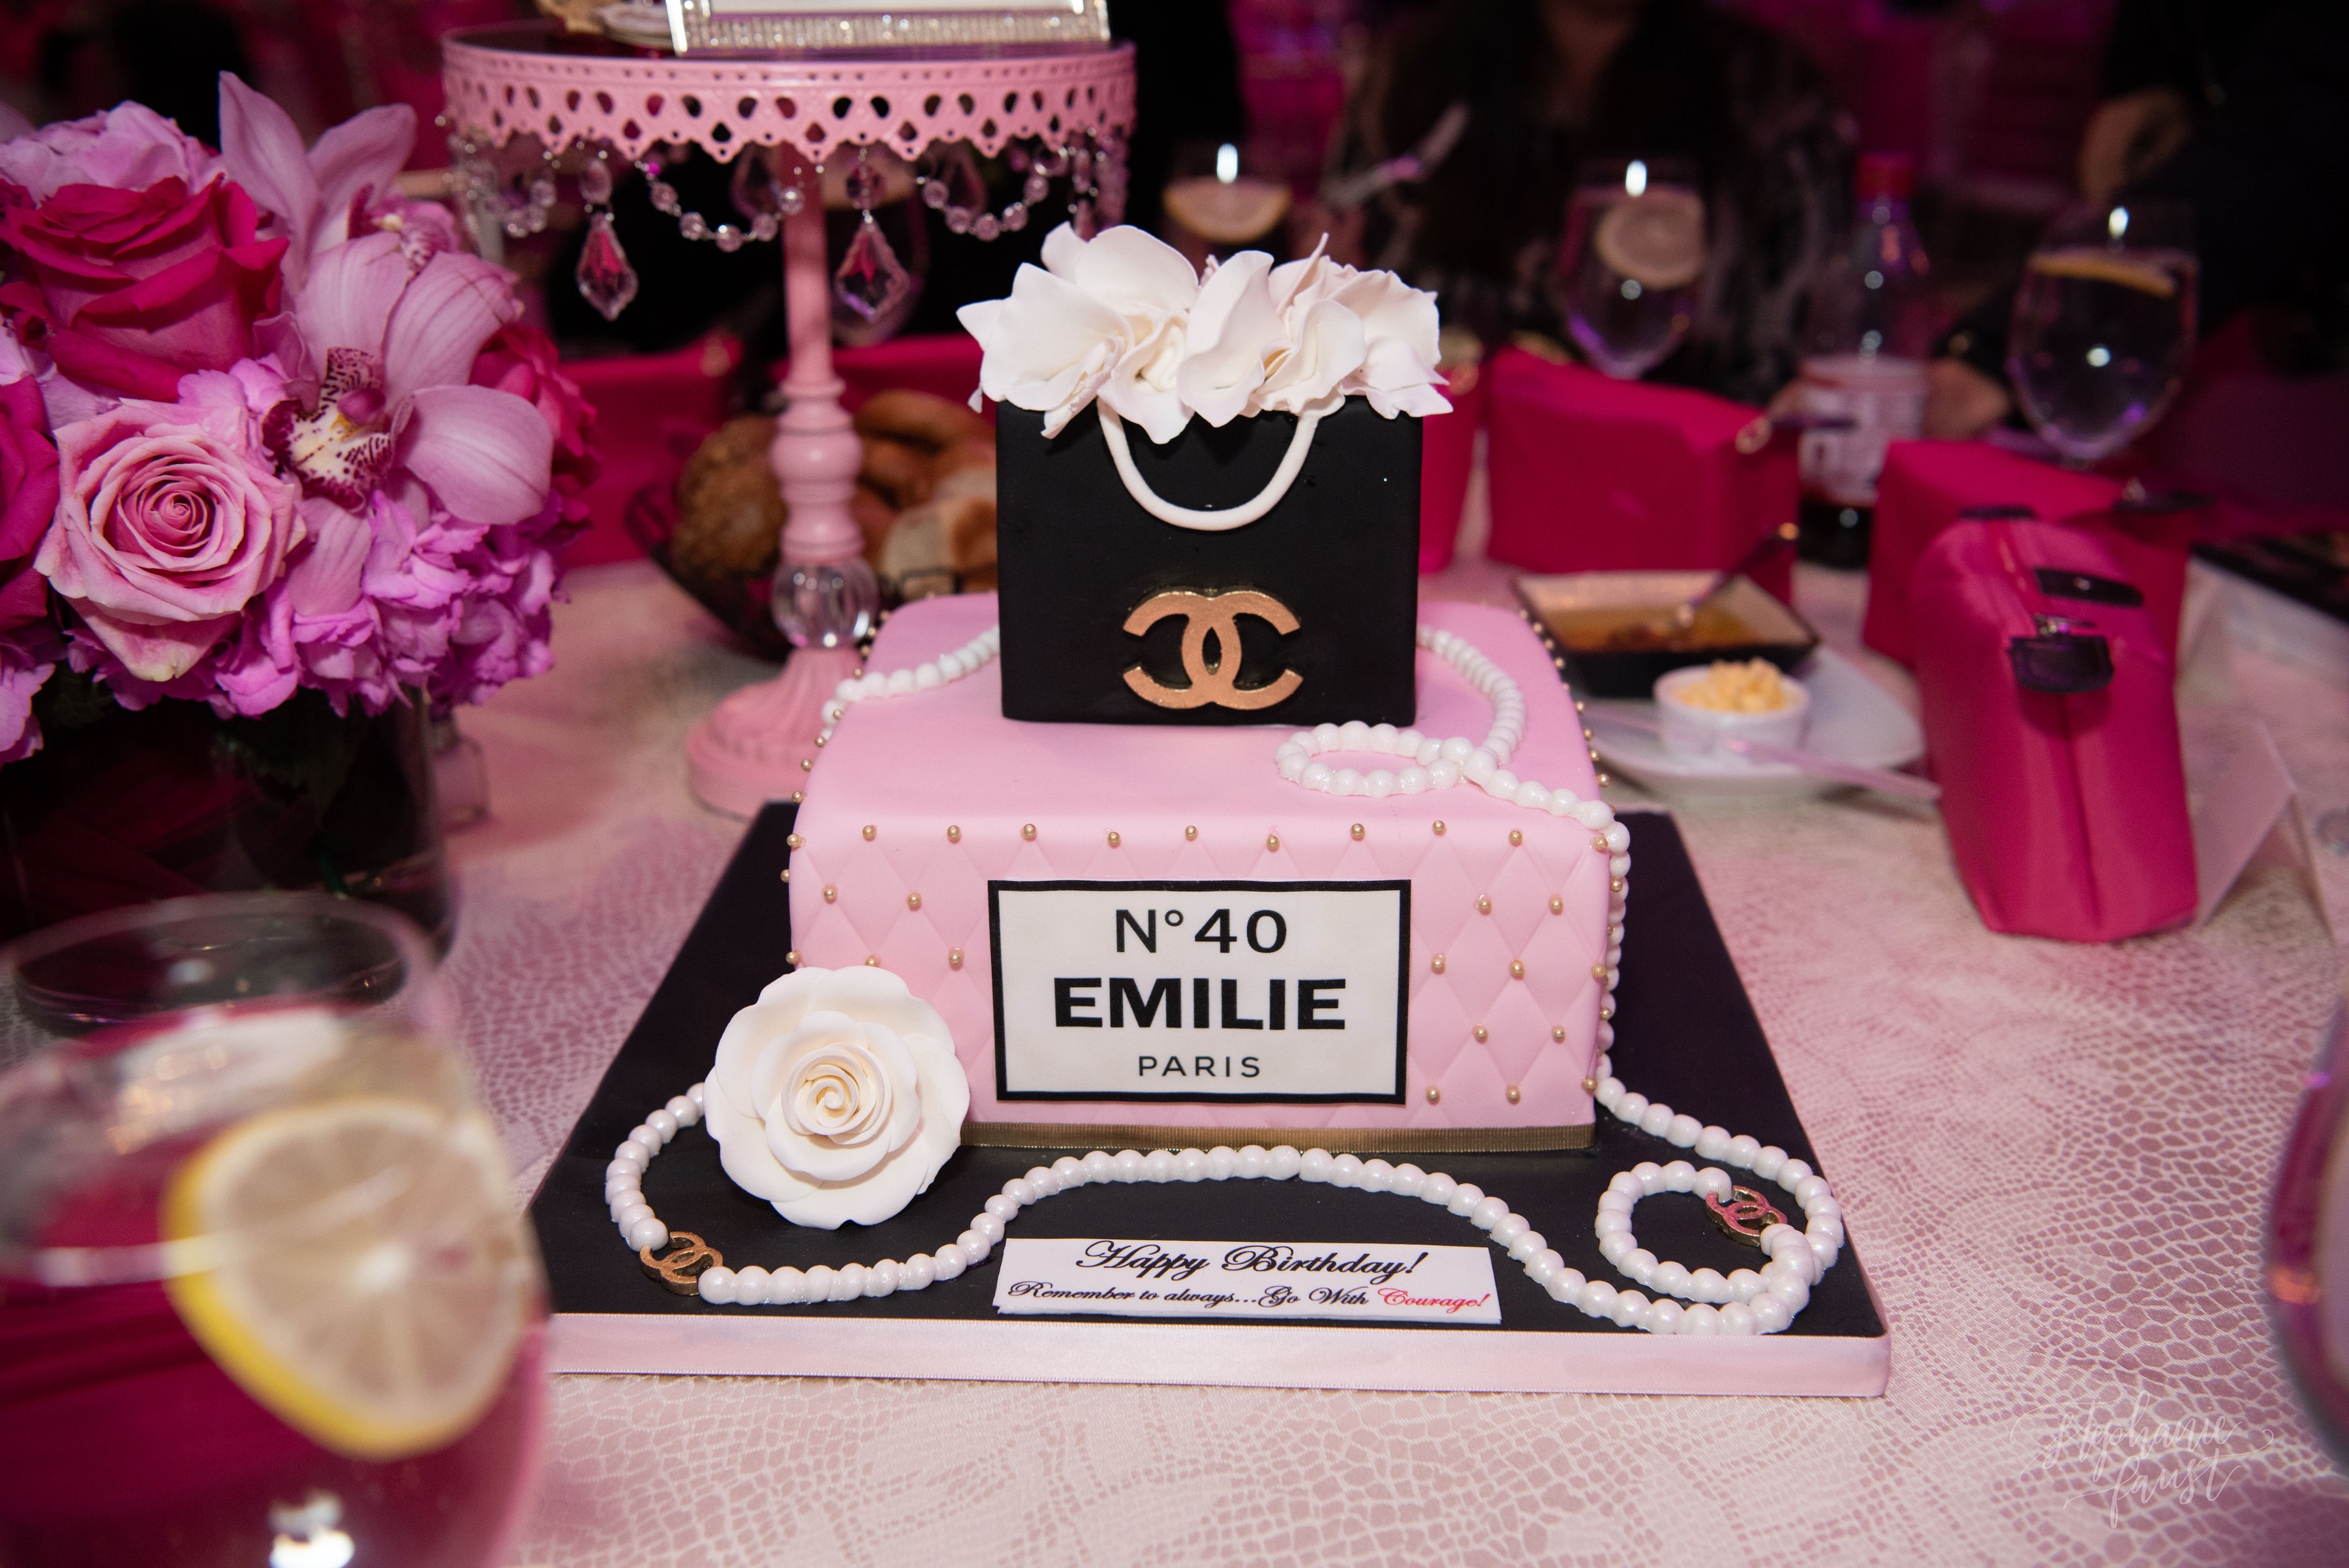 emily's cake #1